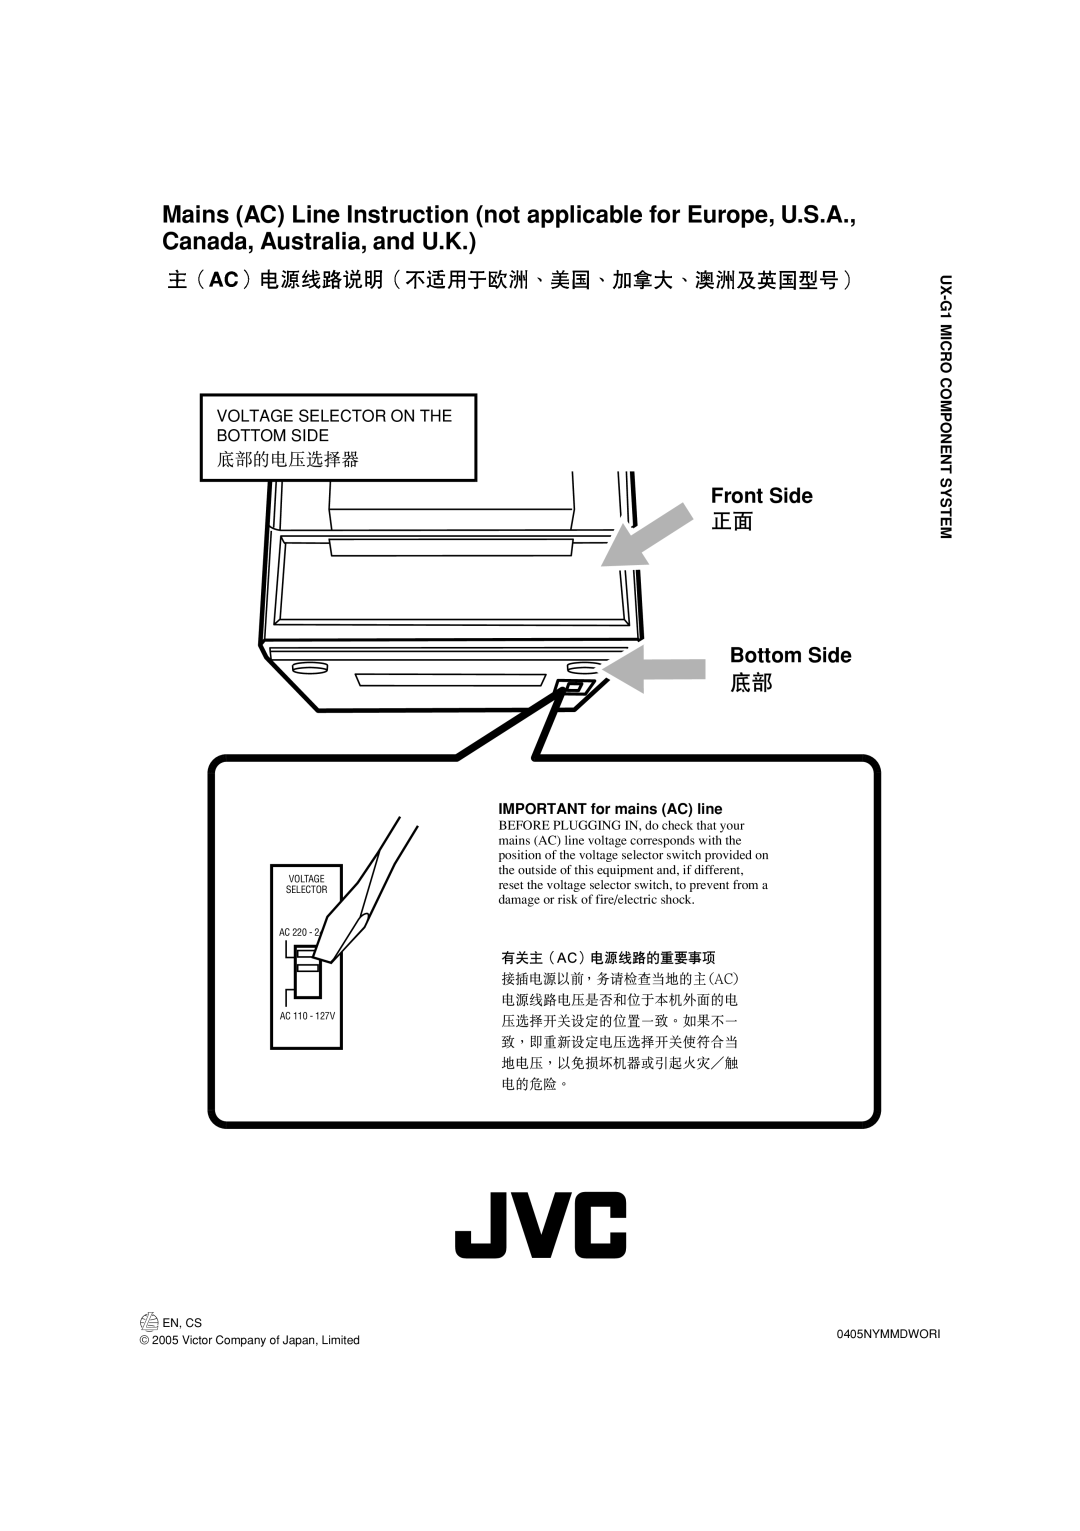 JVC LVT1356-005A manual Front Side Bottom Side, Voltage Selector On The Bottom Side, IMPORTANT for mains AC line 